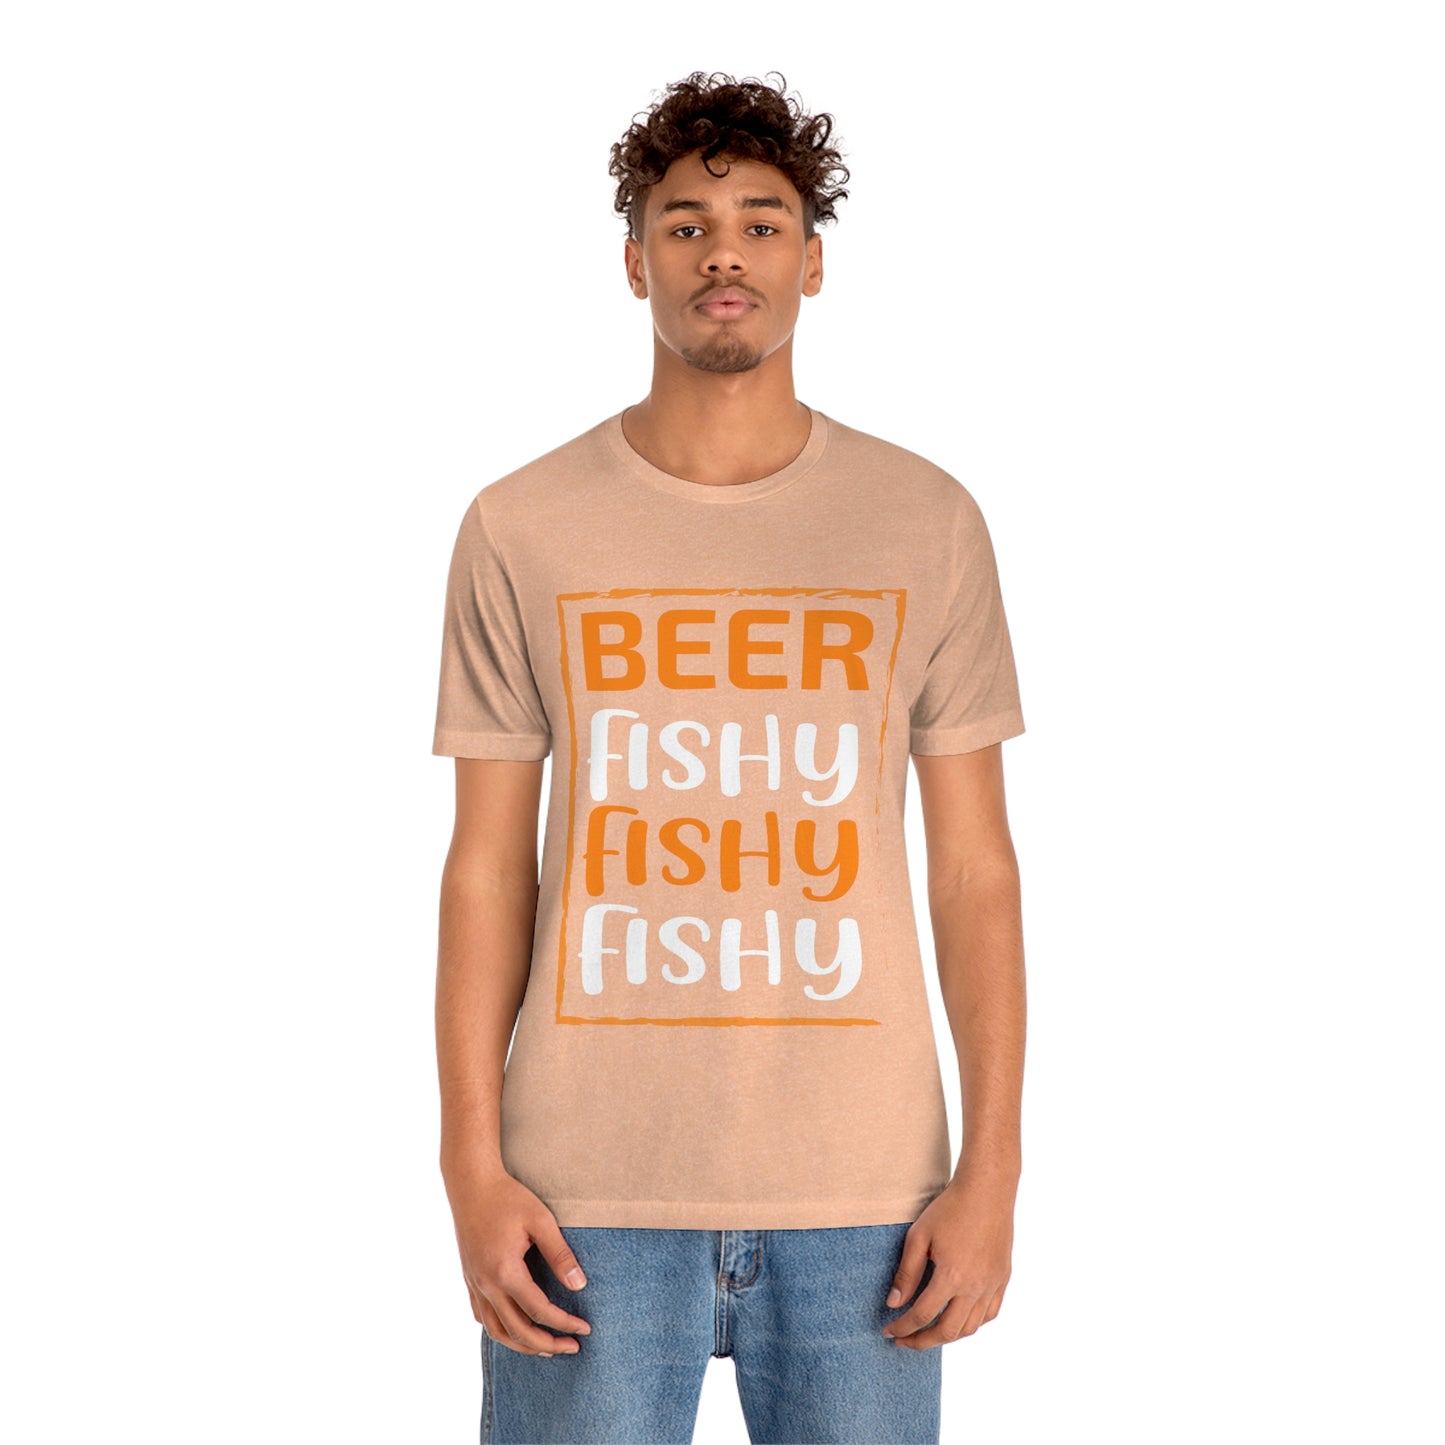 Beer Fishy Fishy Fishy - Unisex T-Shirt